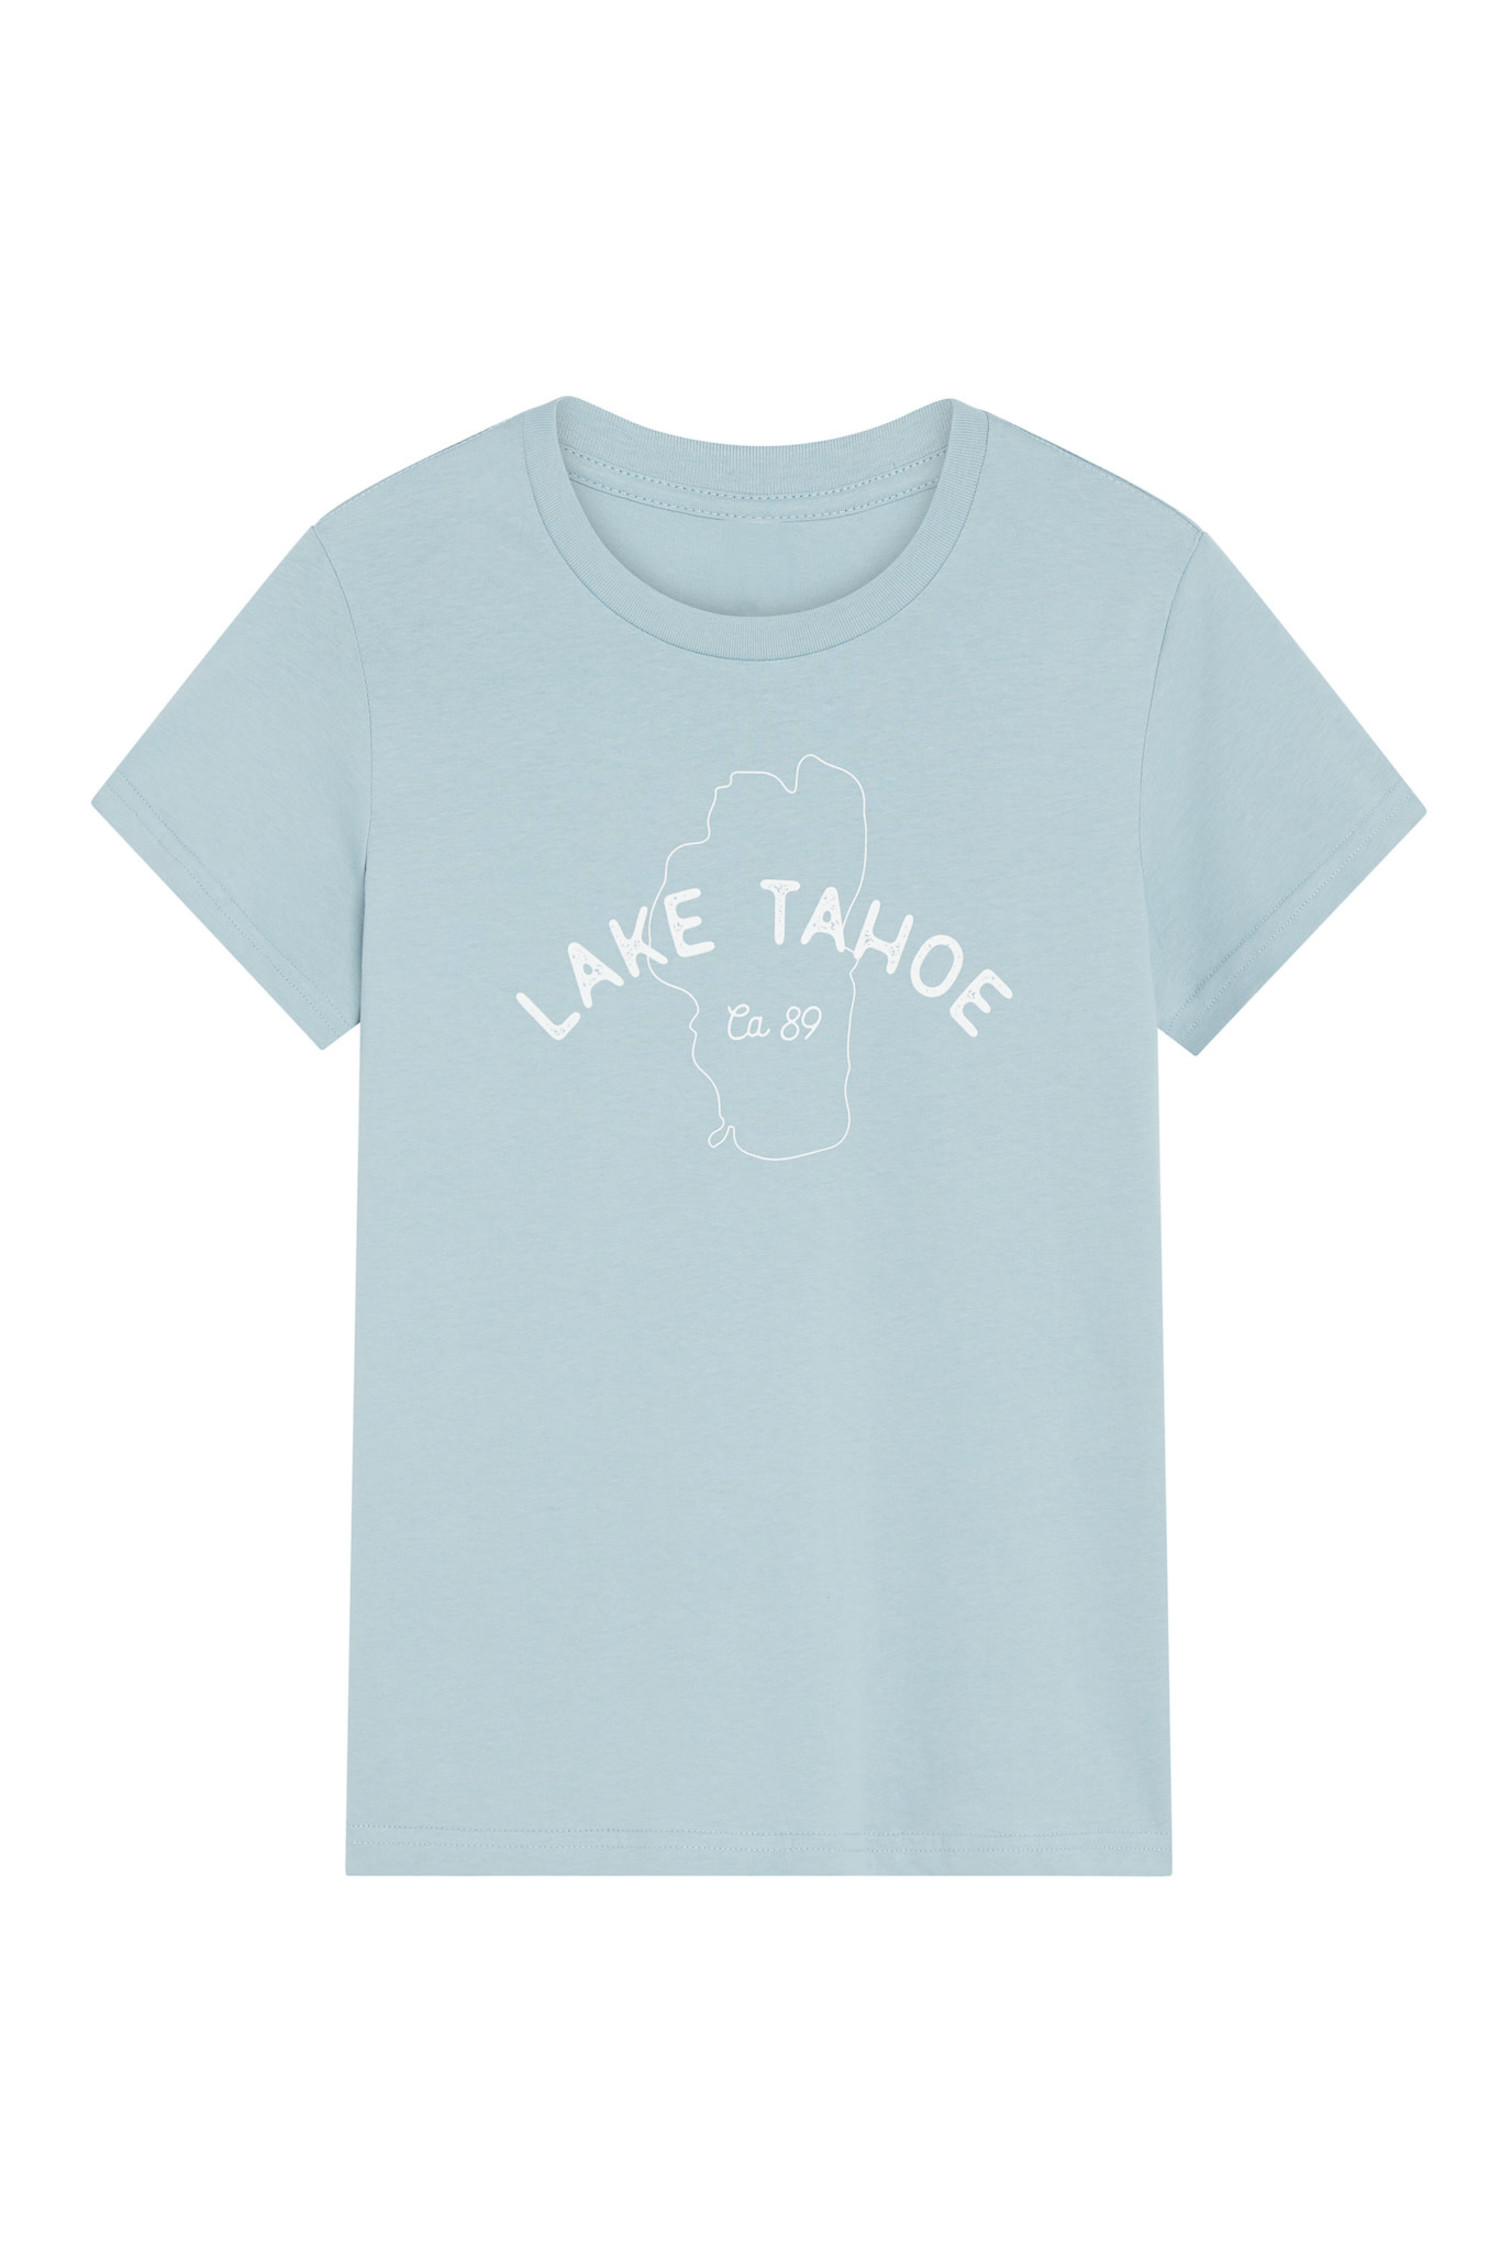 short sleeve Lake tshirt - California